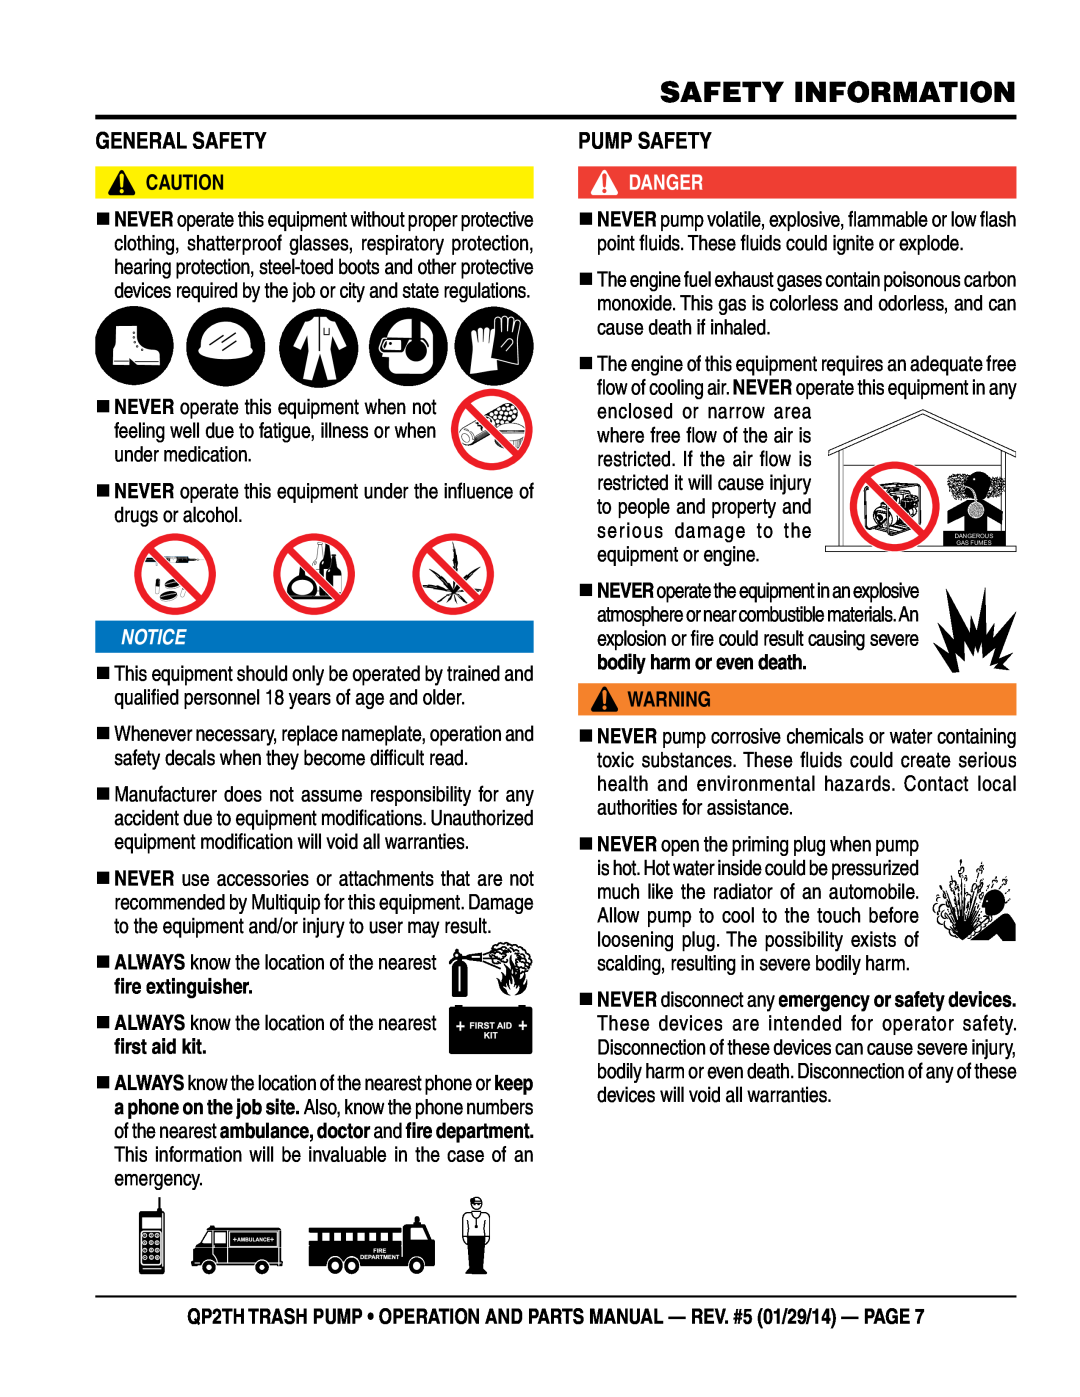 Multiquip QP2TH manual General Safety, Pump Safety, Safety Information, Danger 